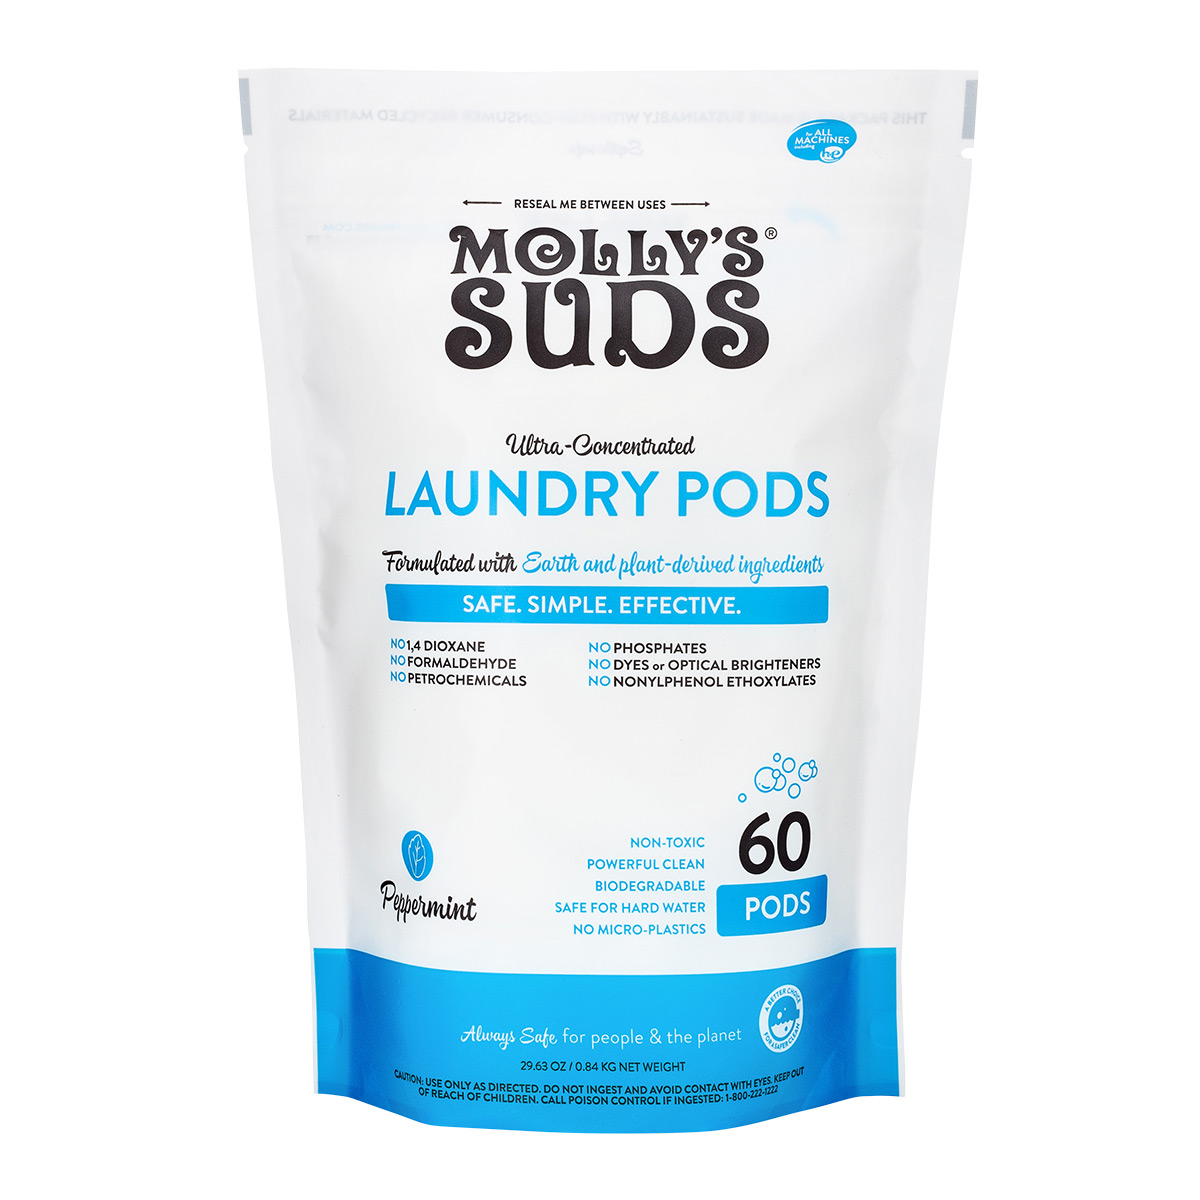 Molly's Suds, Original Laundry Powder, Lotus and Peony